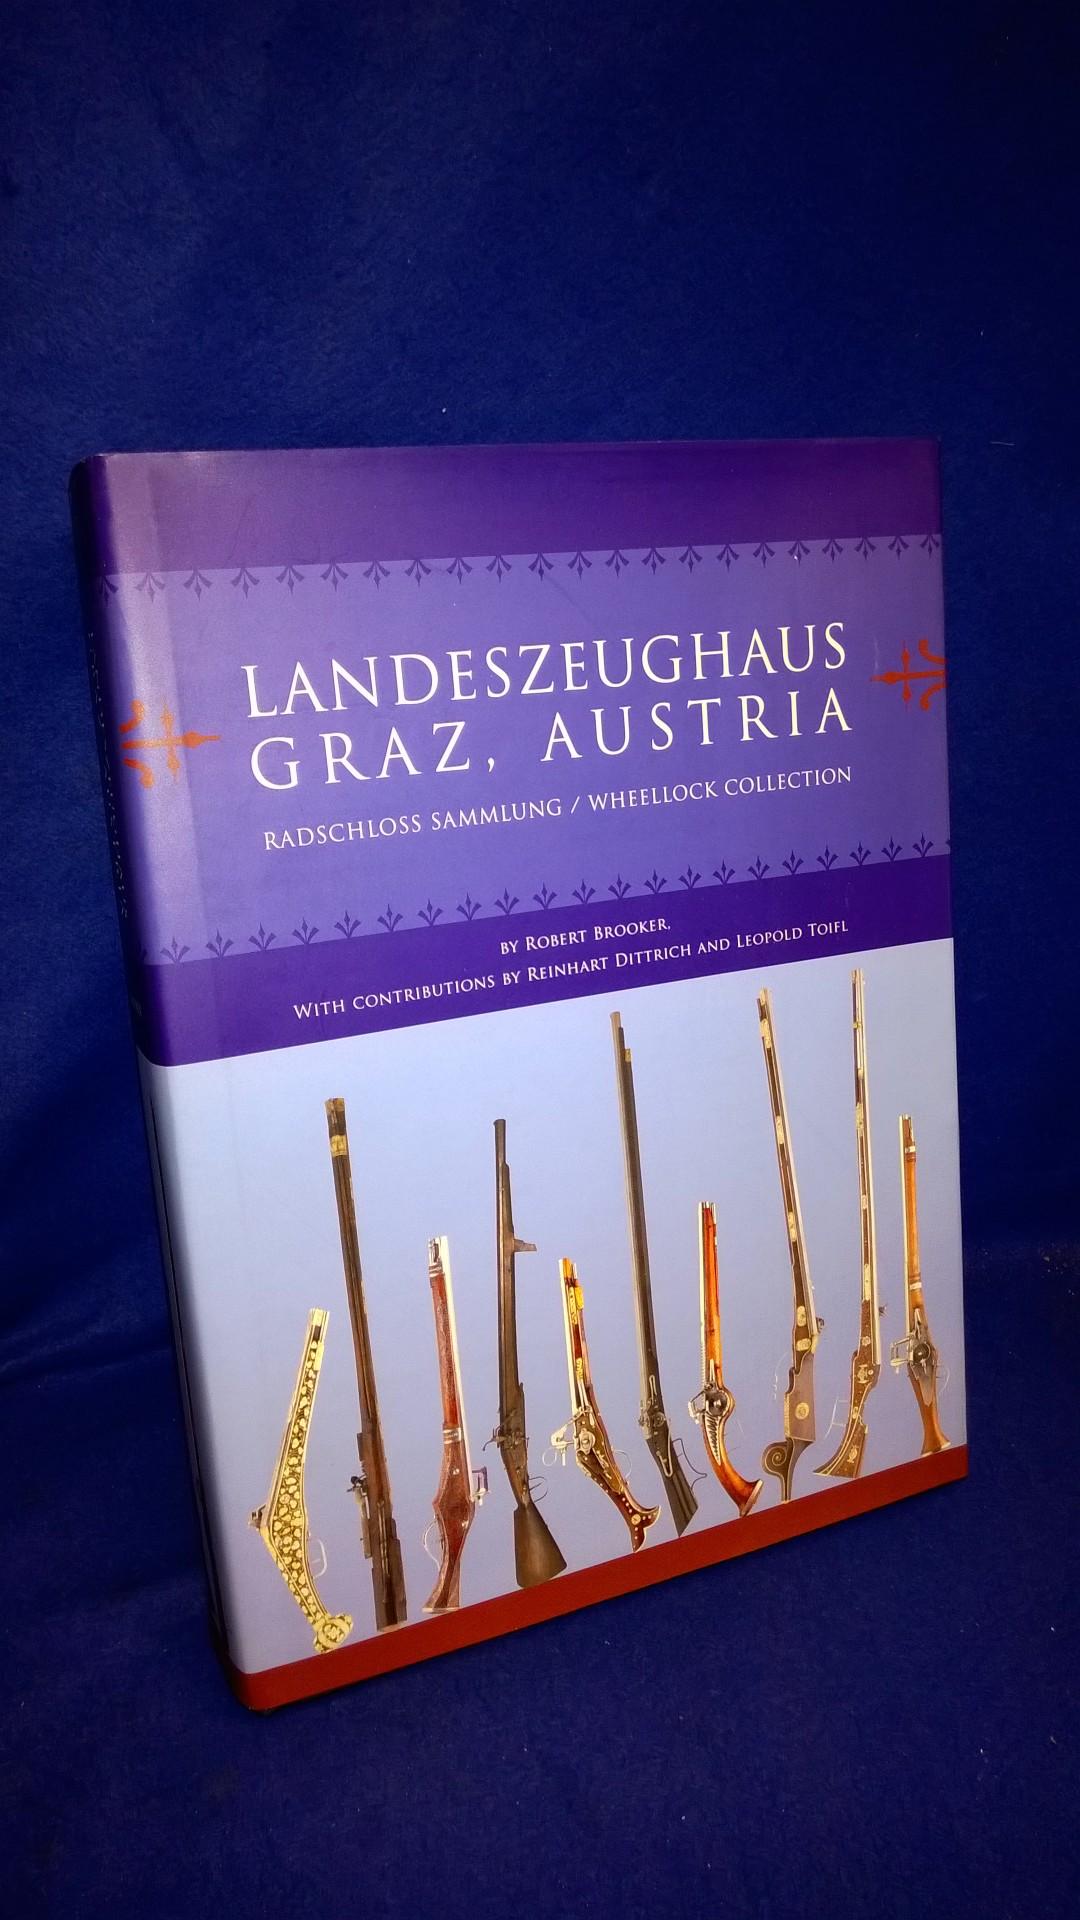  Landeszeughaus Graz, Austria Radschloss Sammlung/Wheellock Collection. 